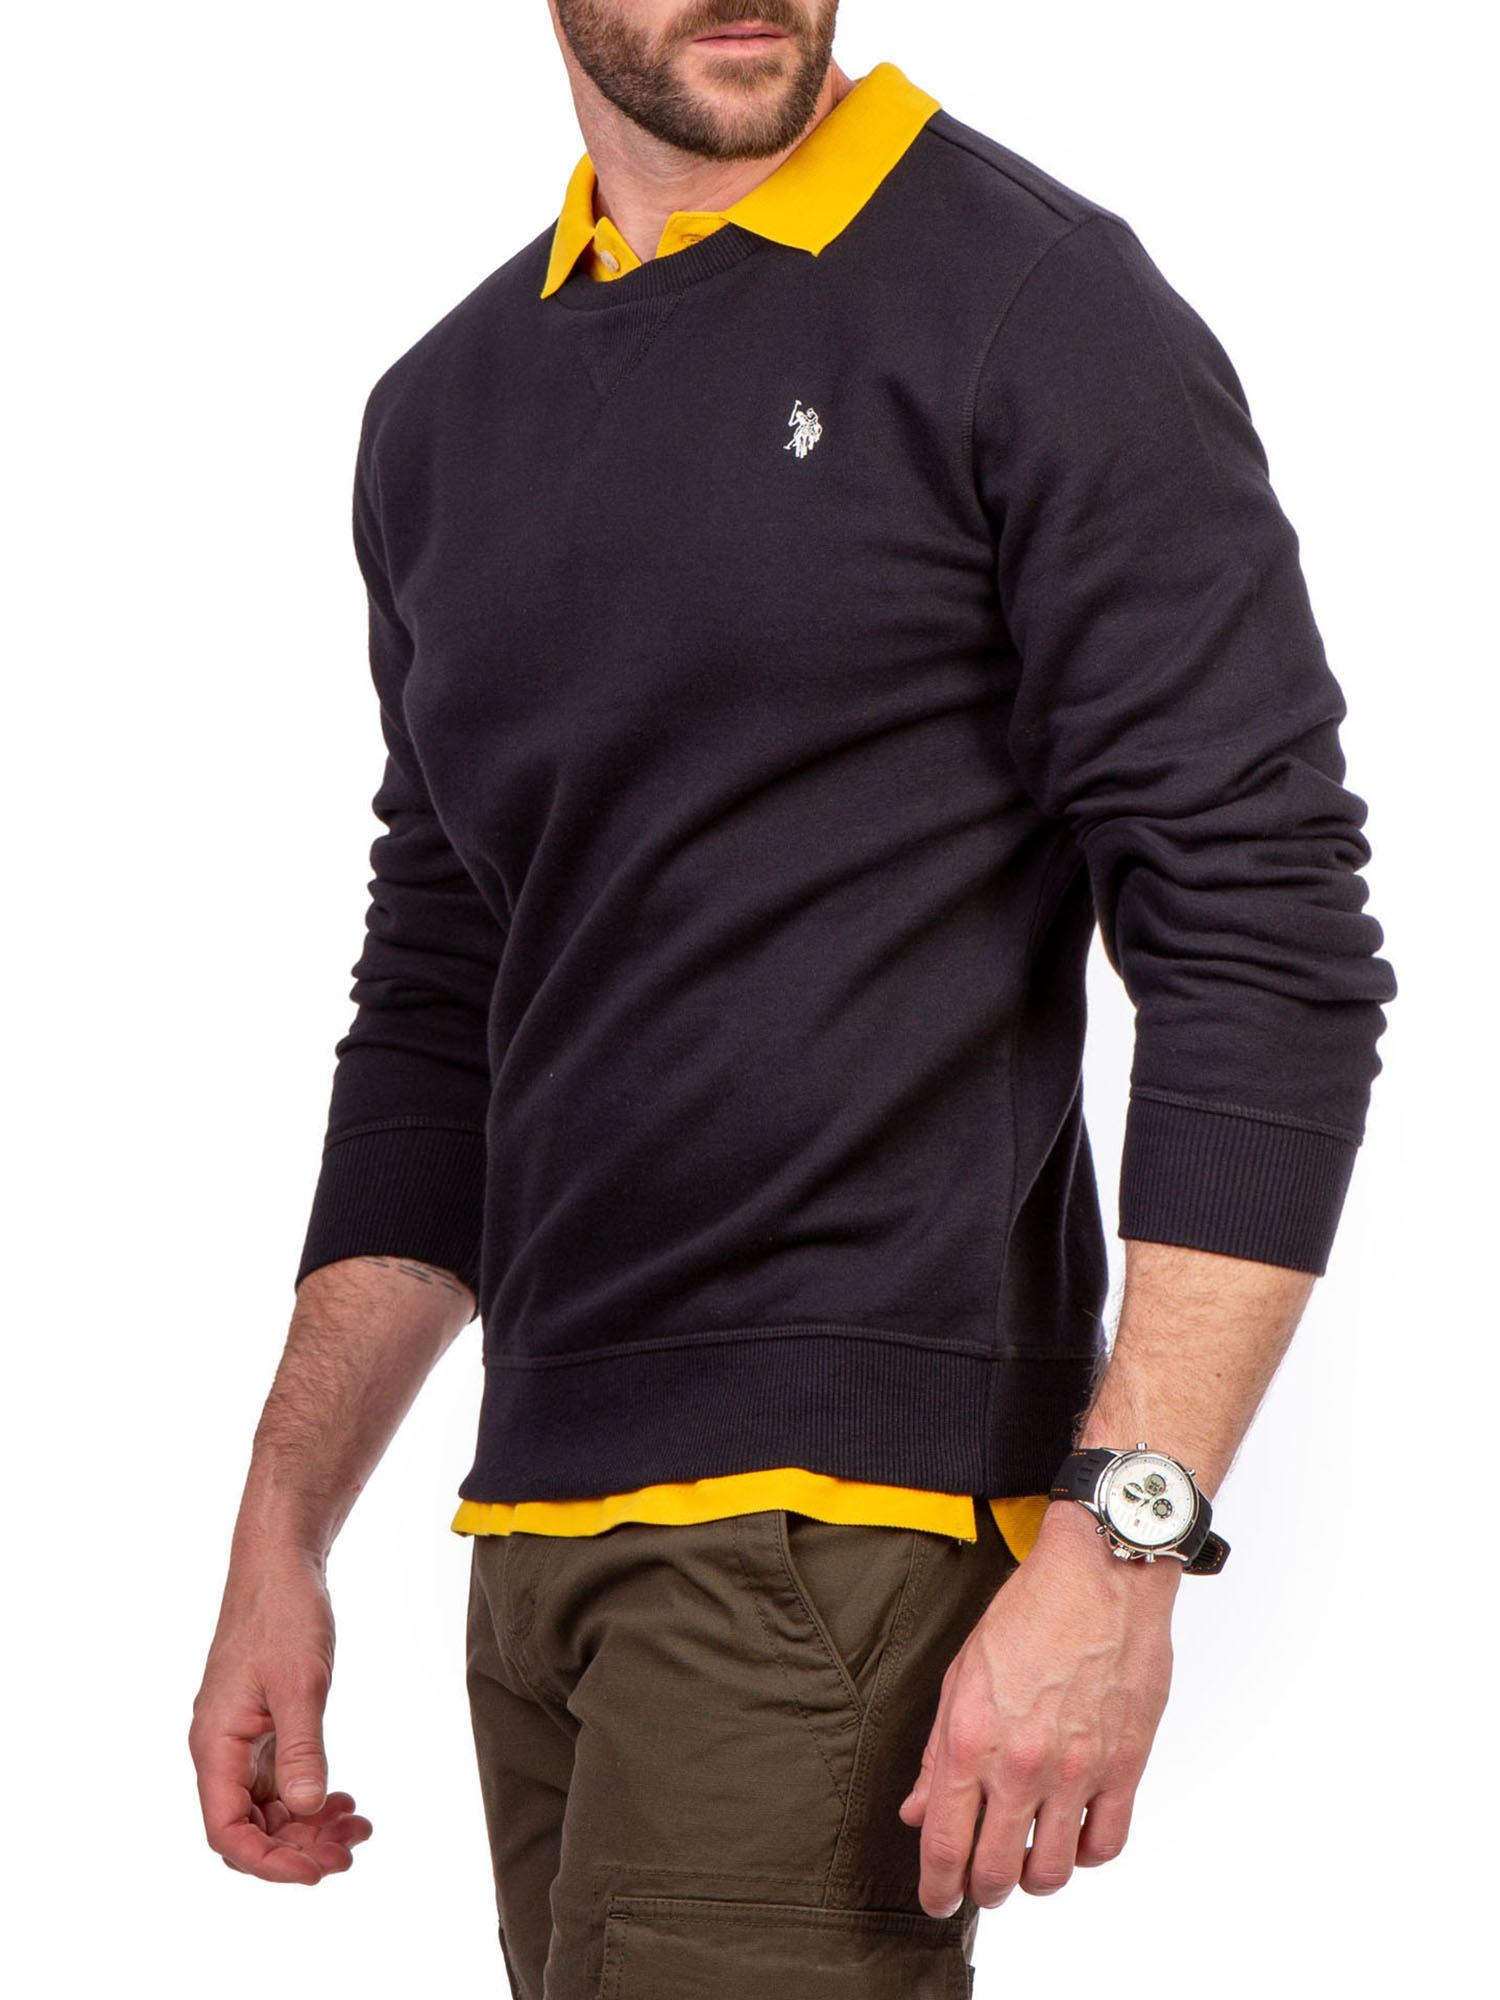 U.S. Polo Assn. Men's Knit Sweater Shirt - image 4 of 5